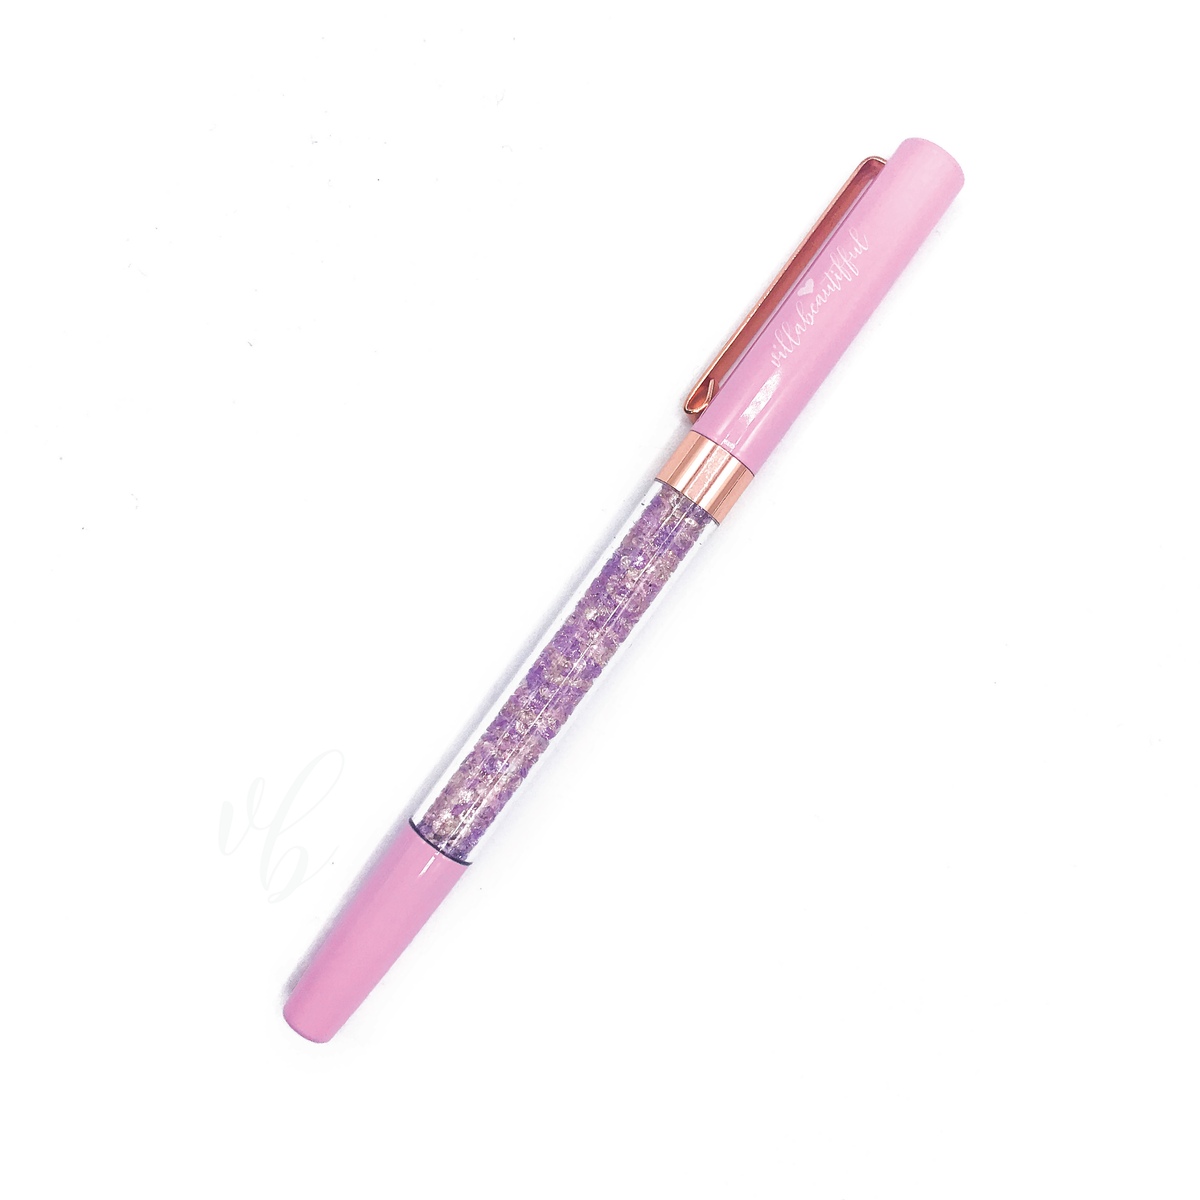 Sakura Imperfect Crystal VBPen | limited pen